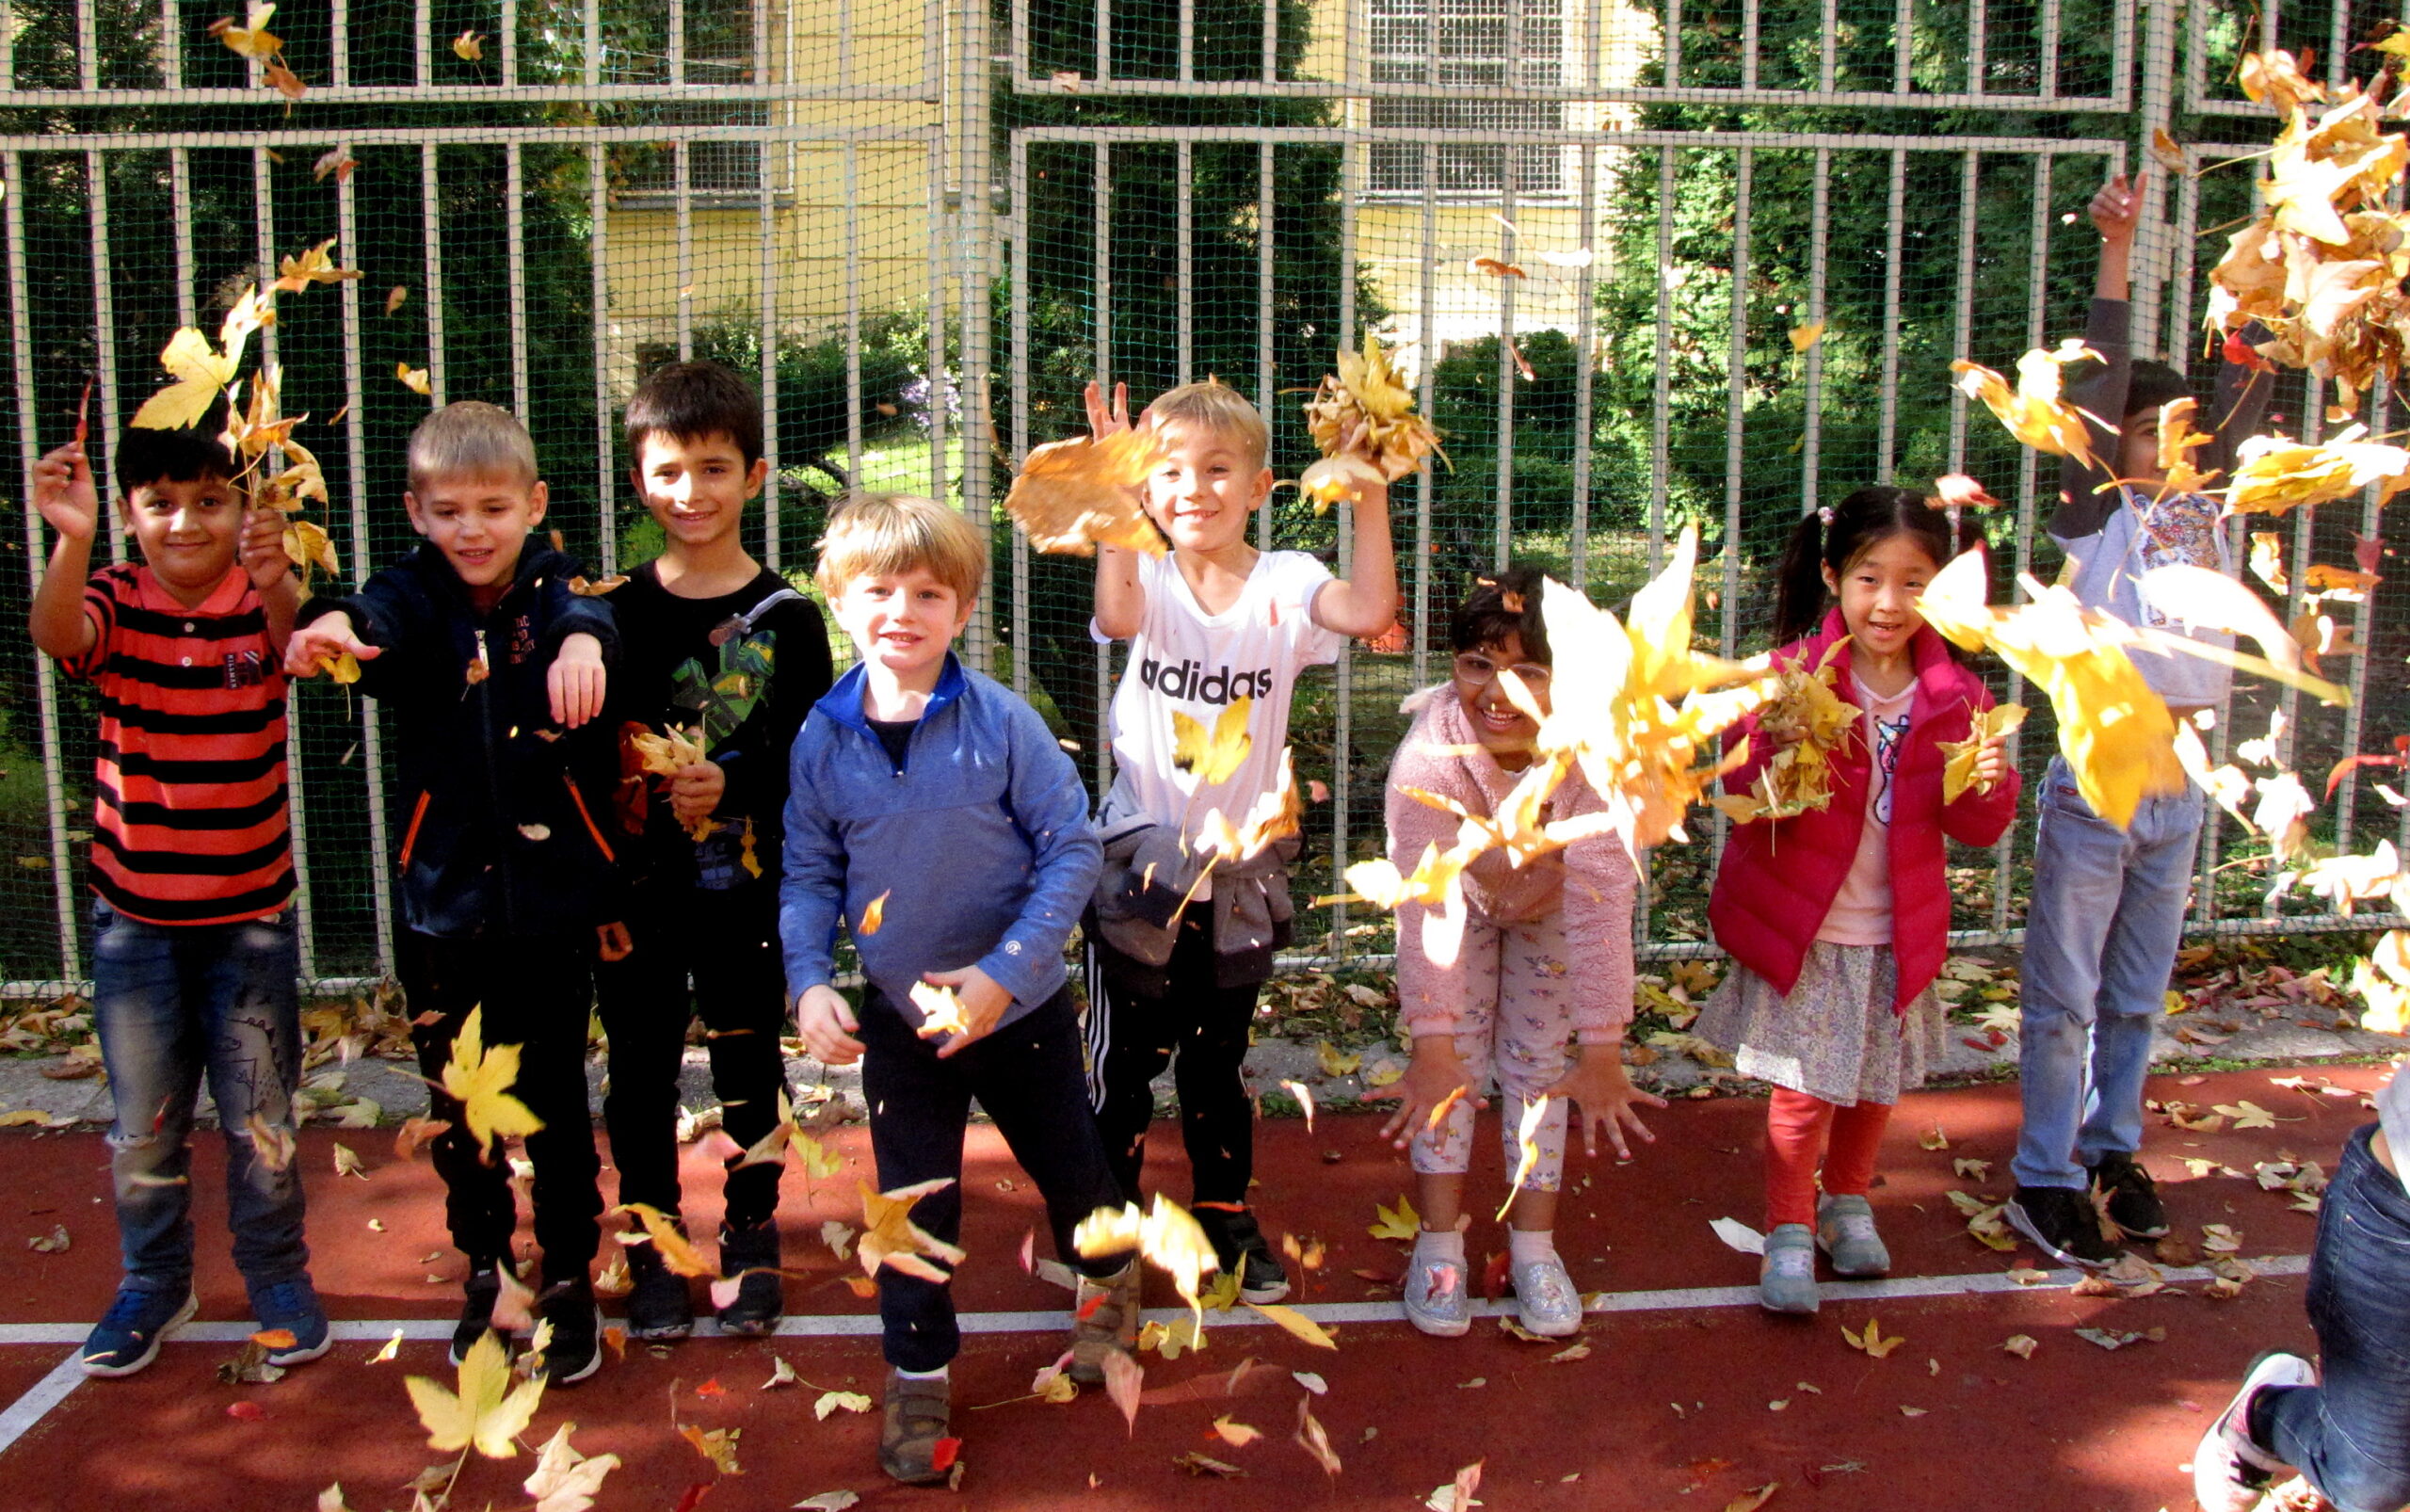 Elementary students enjoying spring, throwing up leaves.